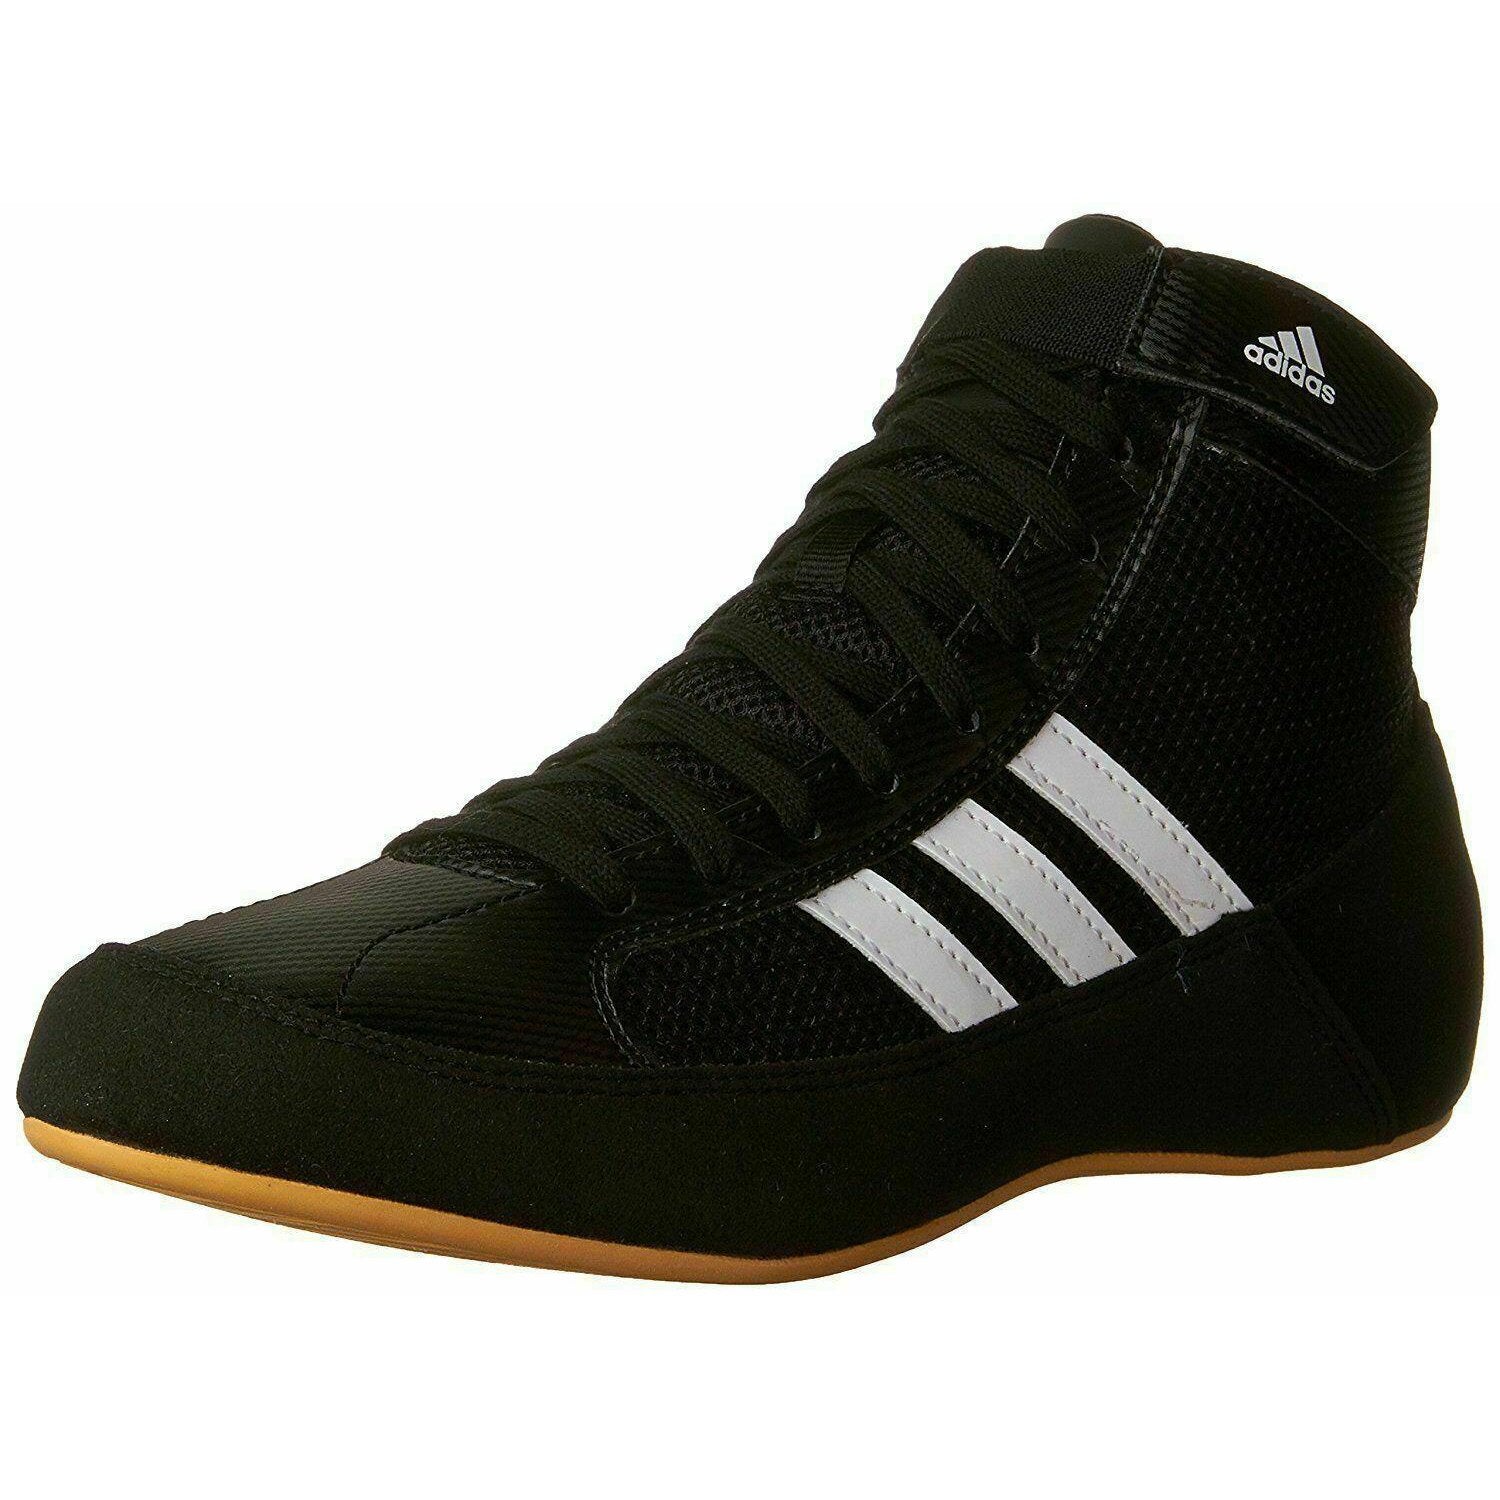 adidas Mens Havoc Wrestling Shoes Black Boxing Boots